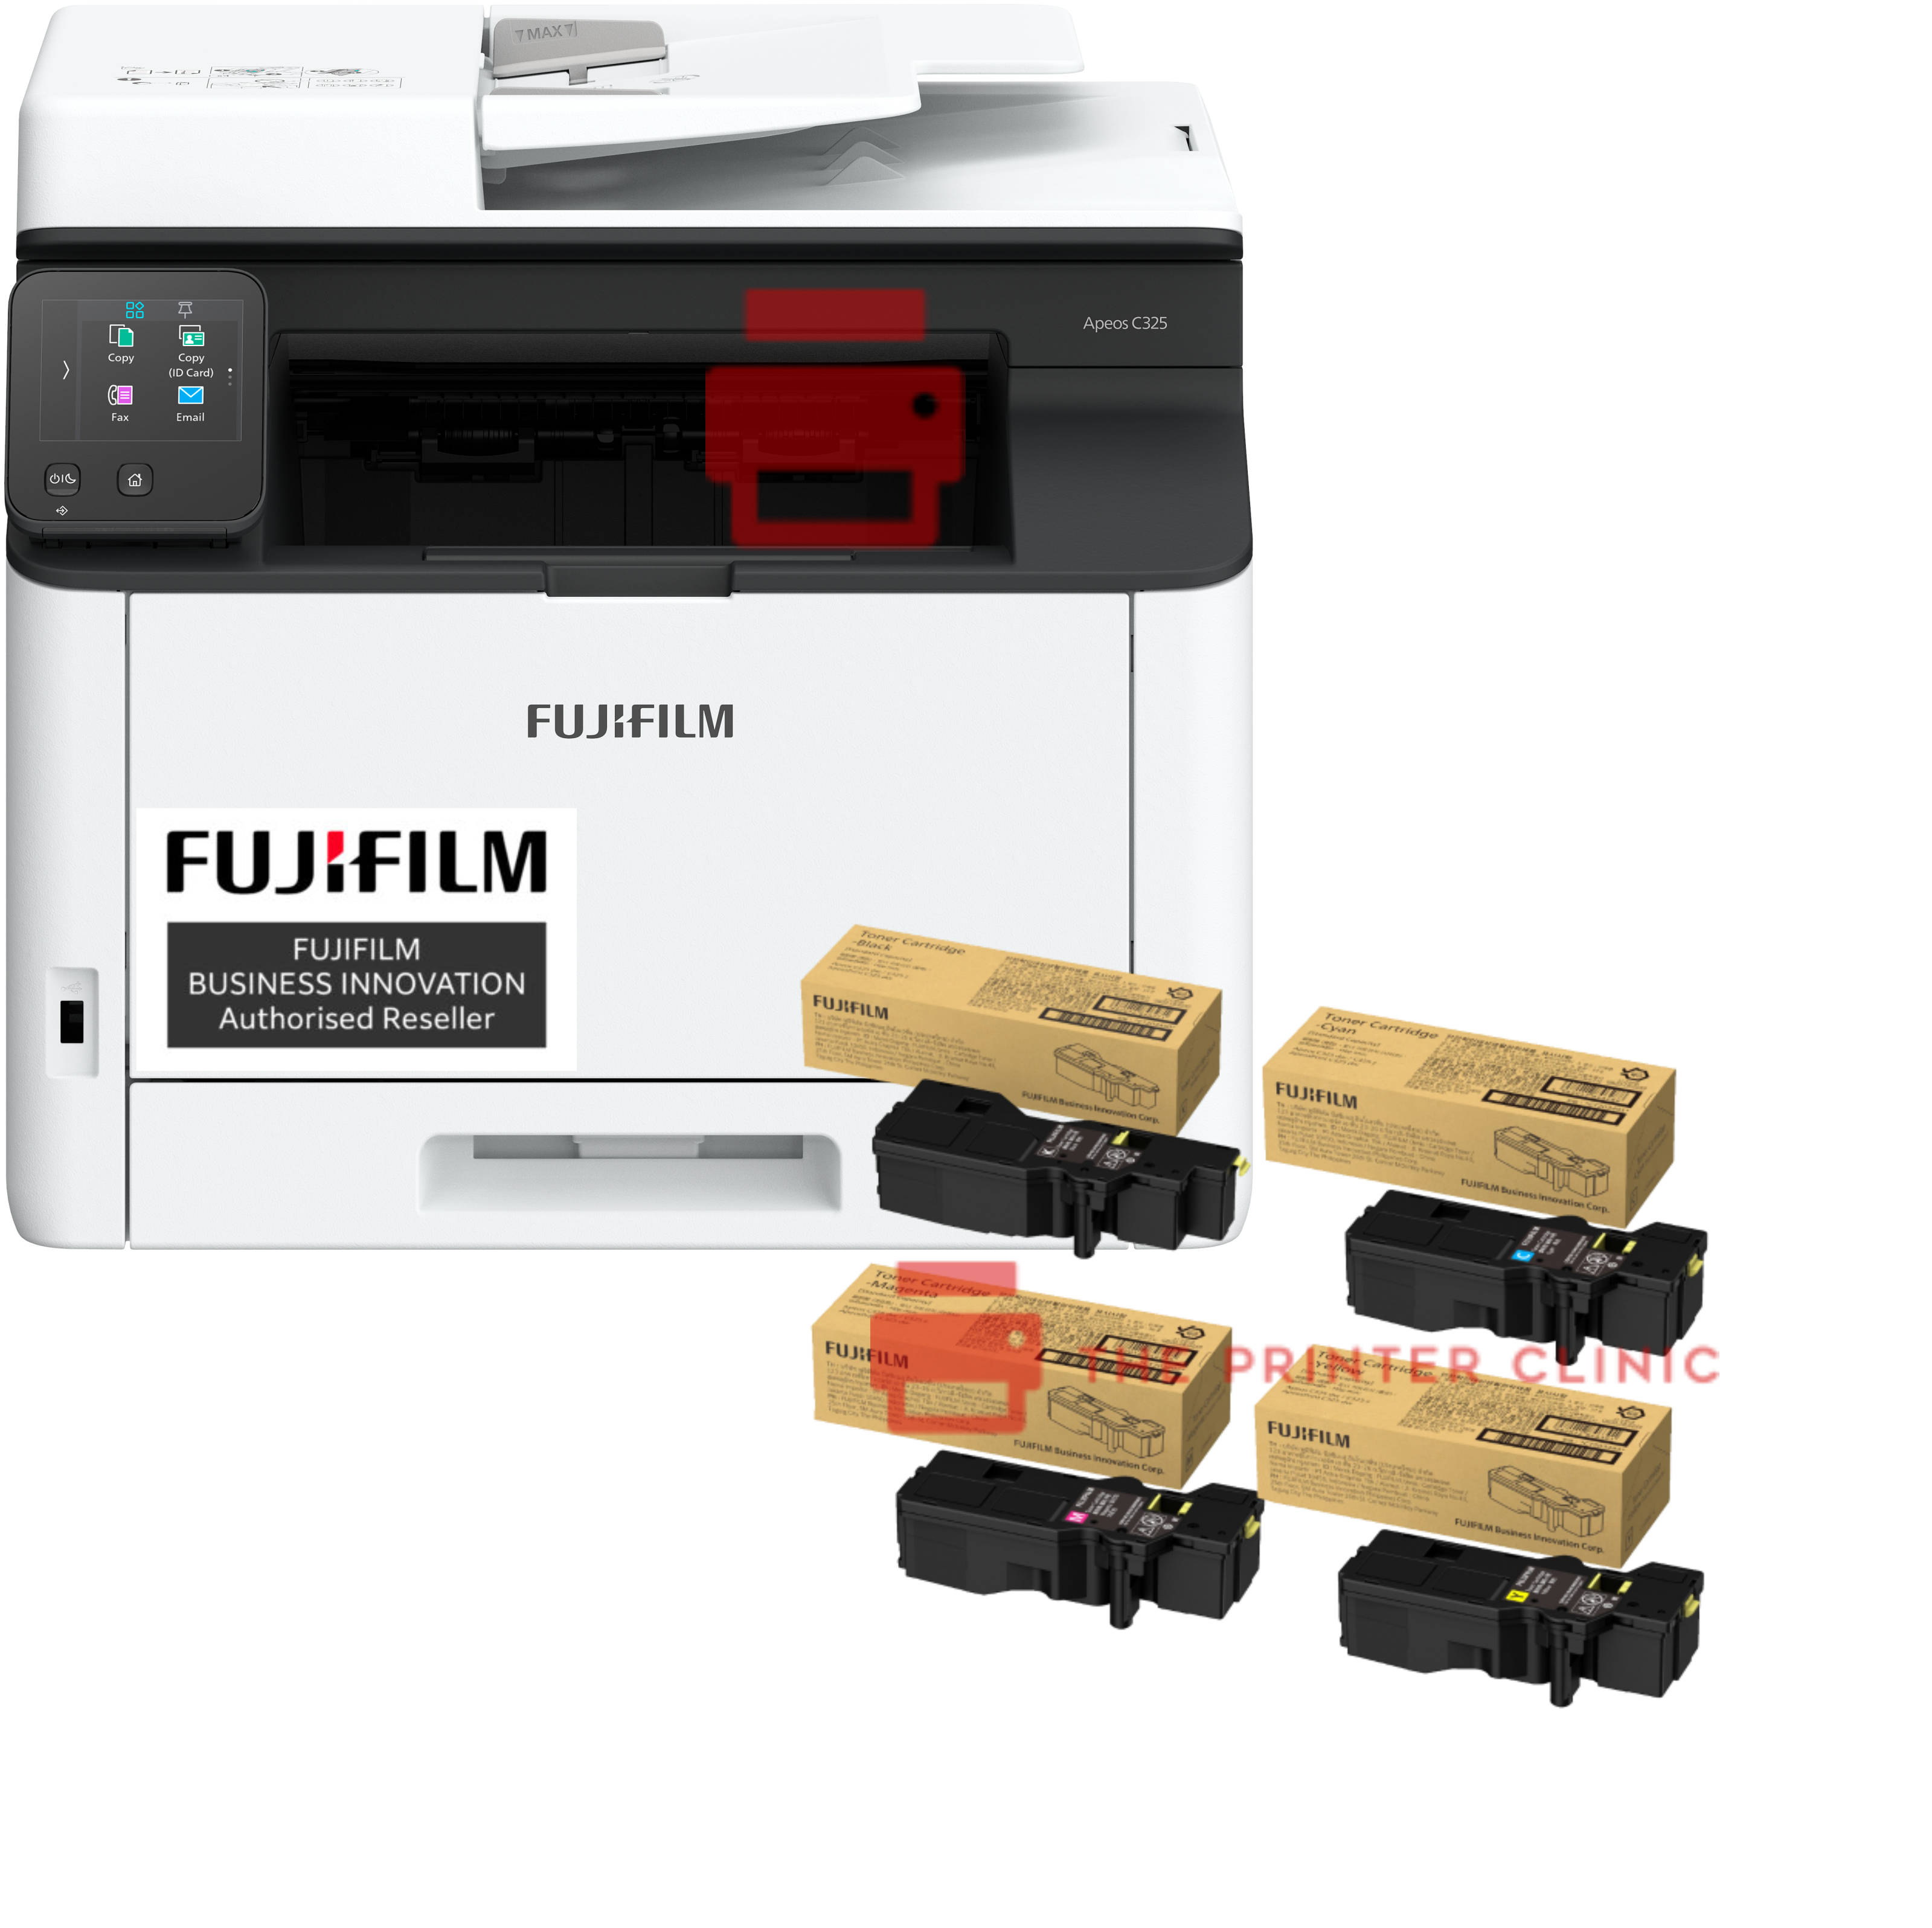 FUJIFILM Apeos C325z A4 Colour Multifunction Printer + Extra Set Of Toner (Wireless)